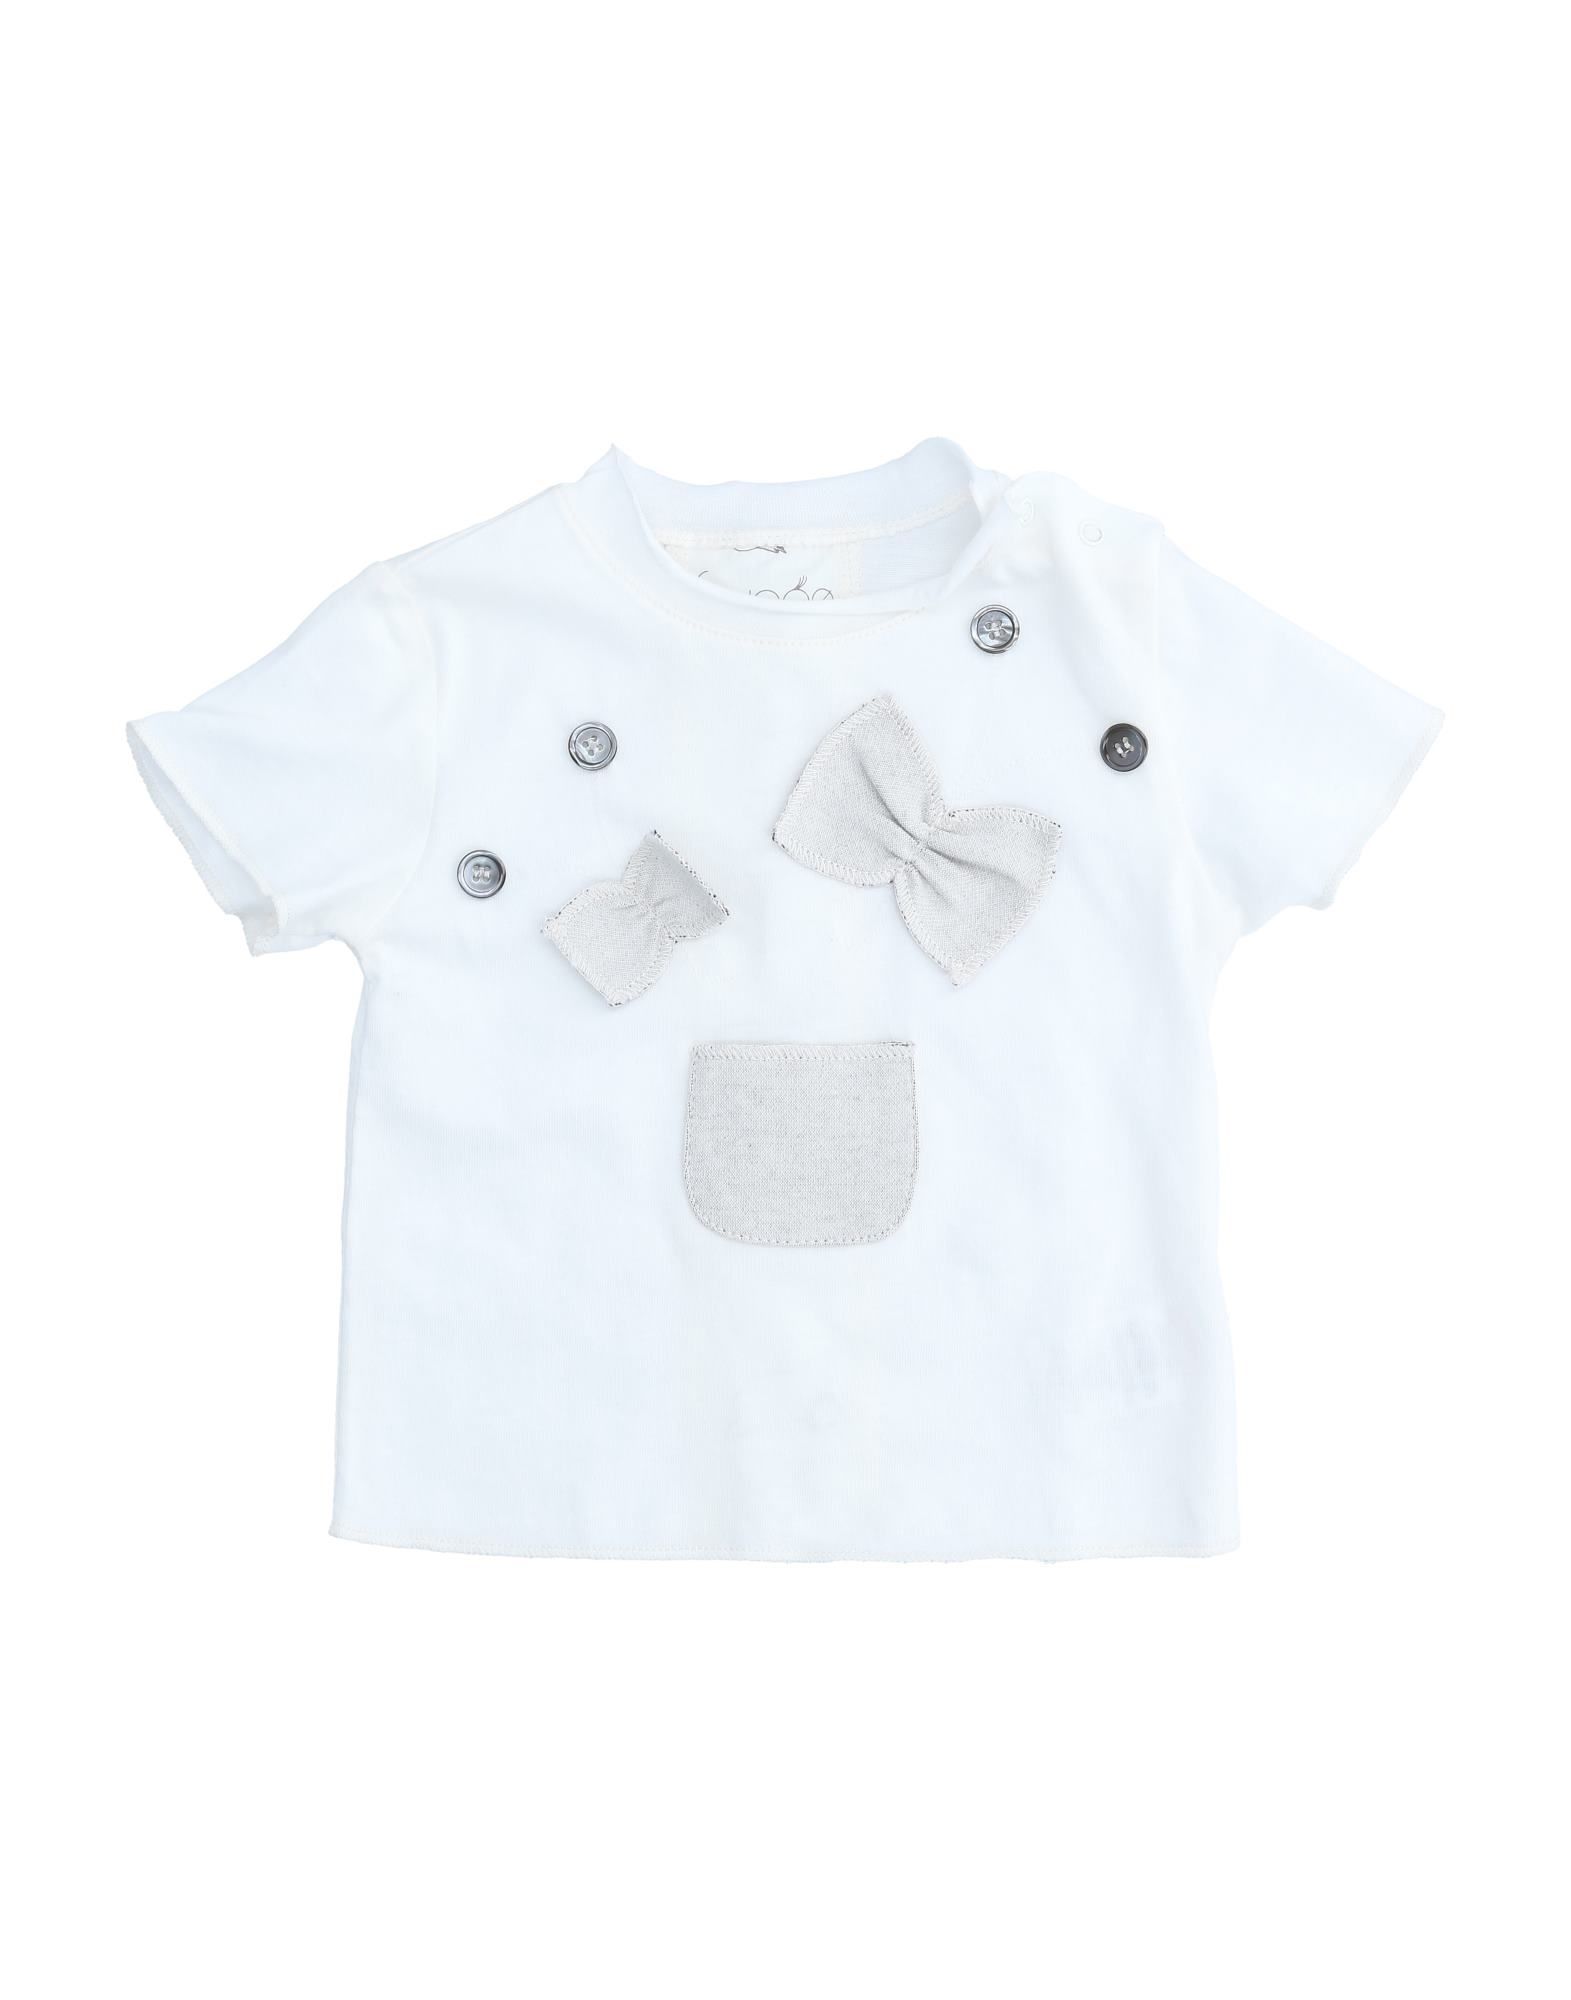 Frugoo Kids' T-shirts In White